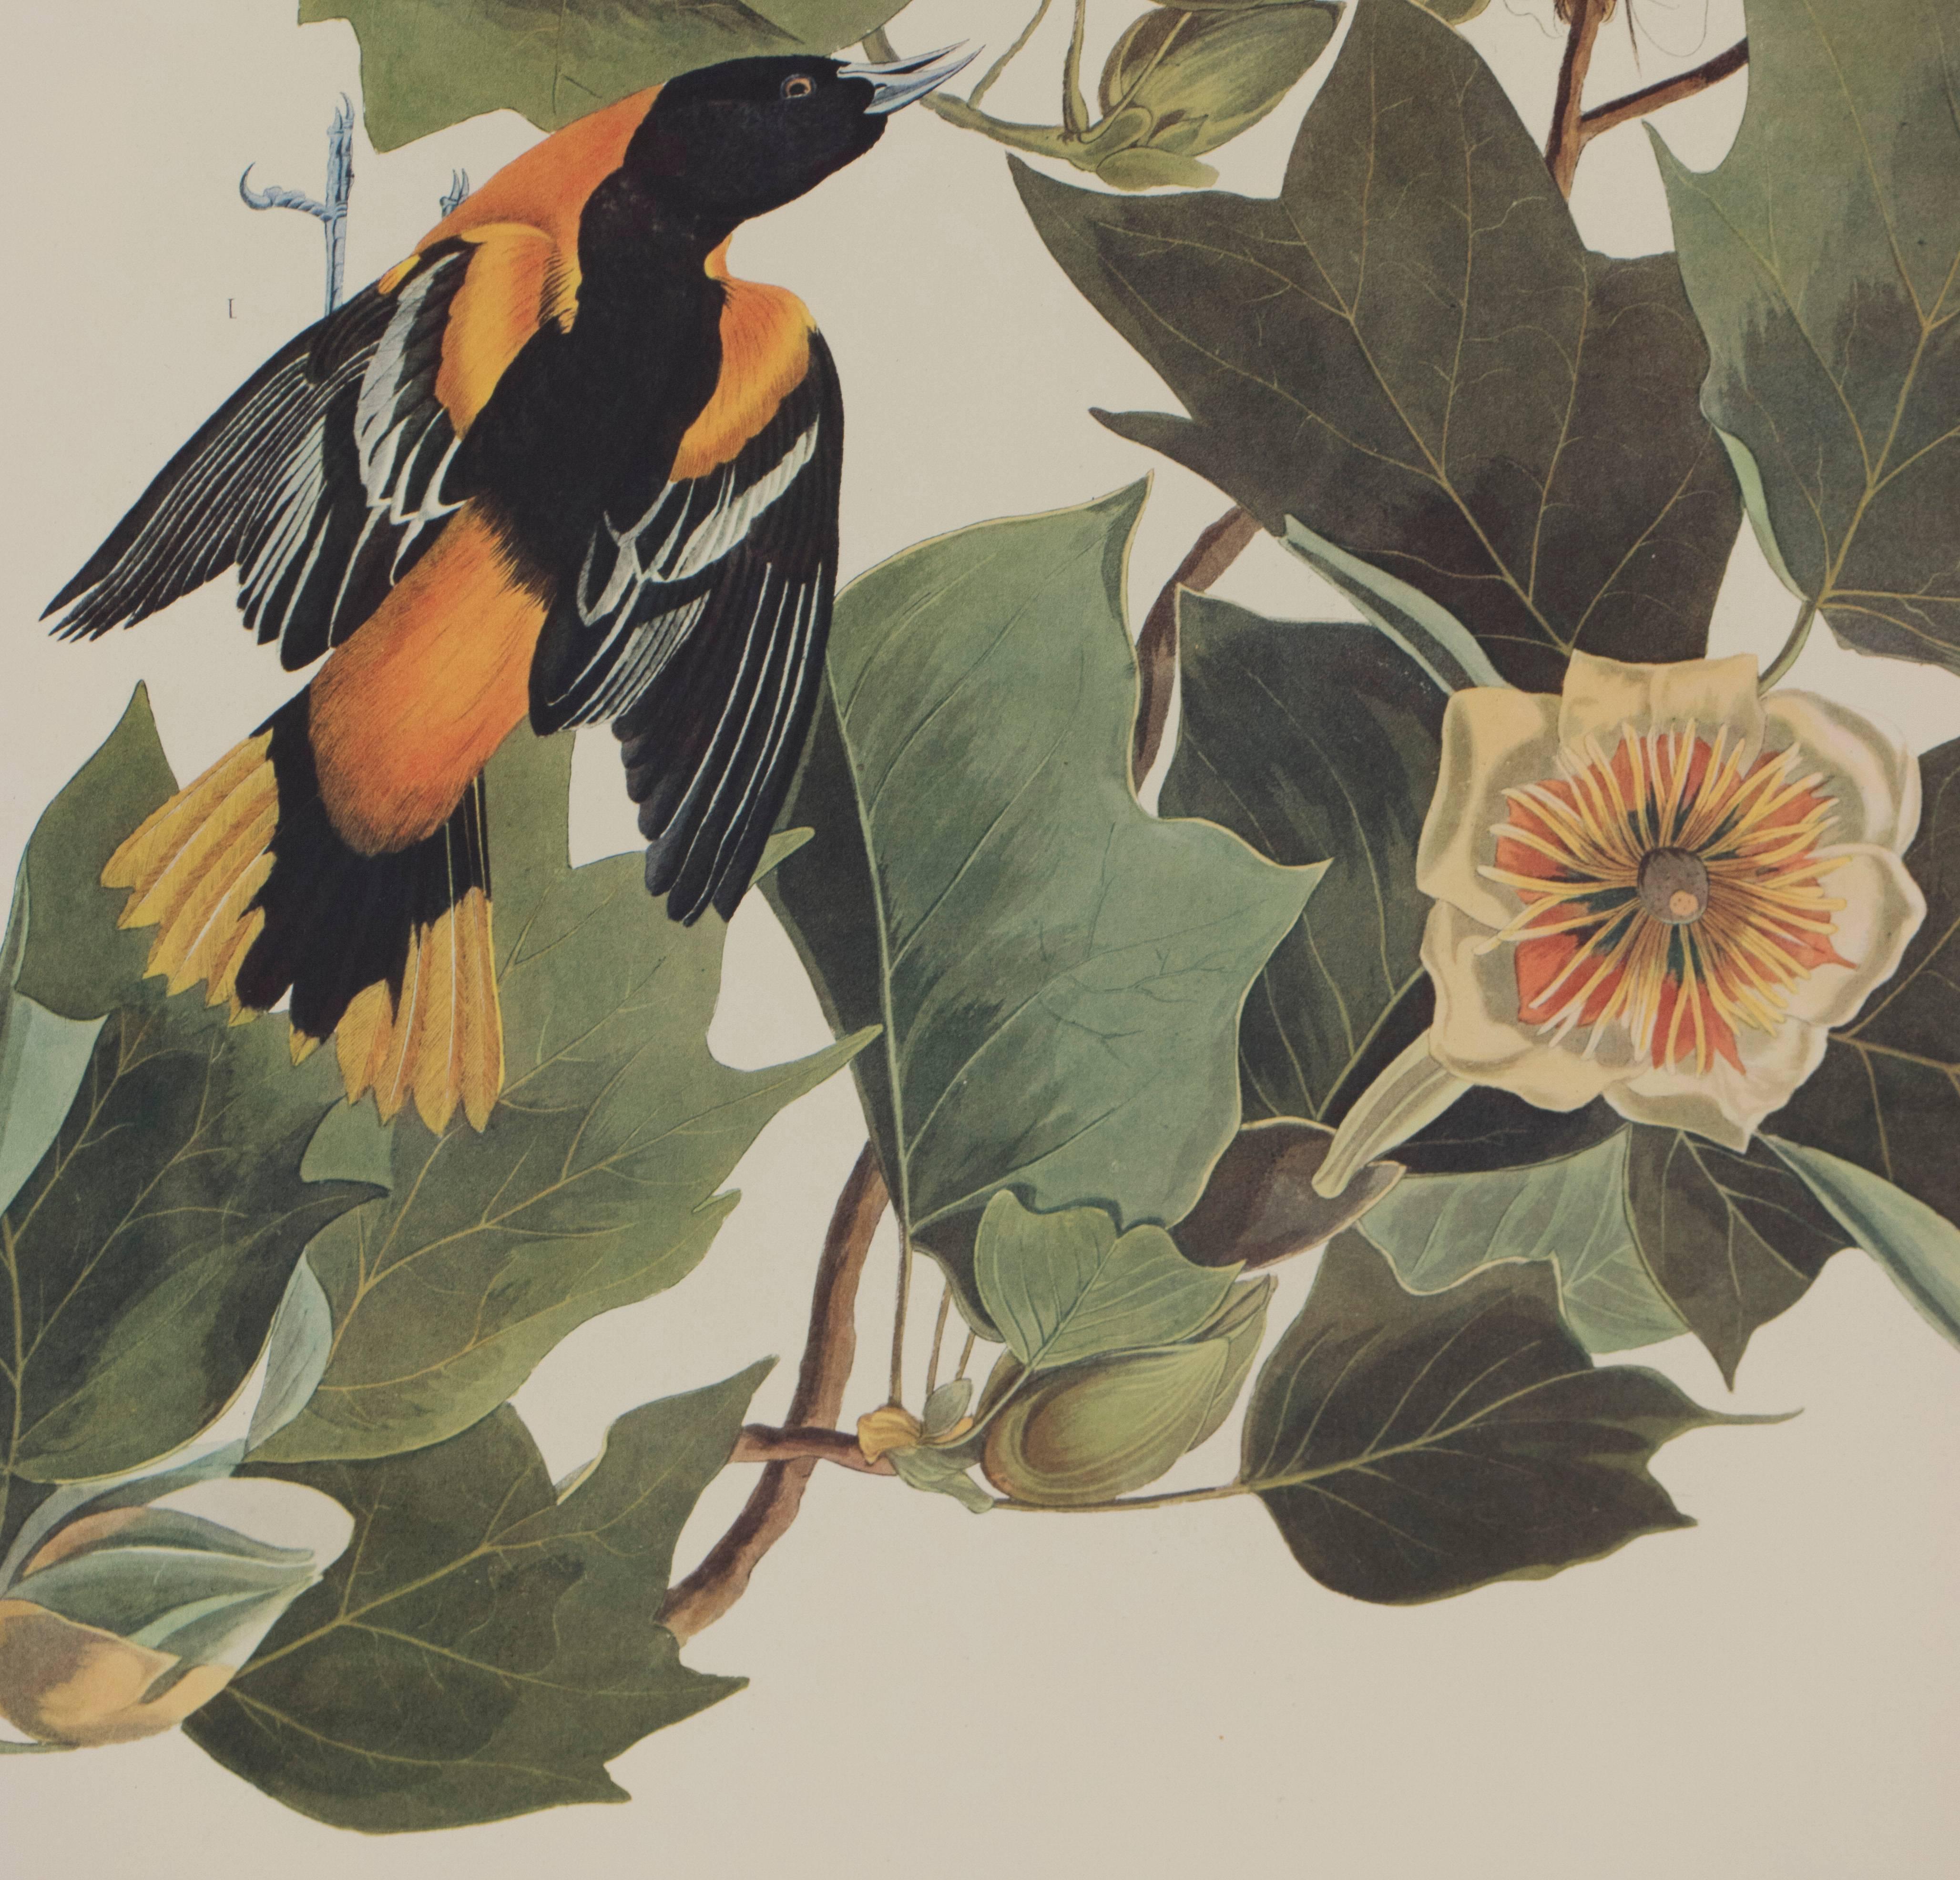 Baltimore Oriole by Audubon  - Naturalistic Print by John James Audubon